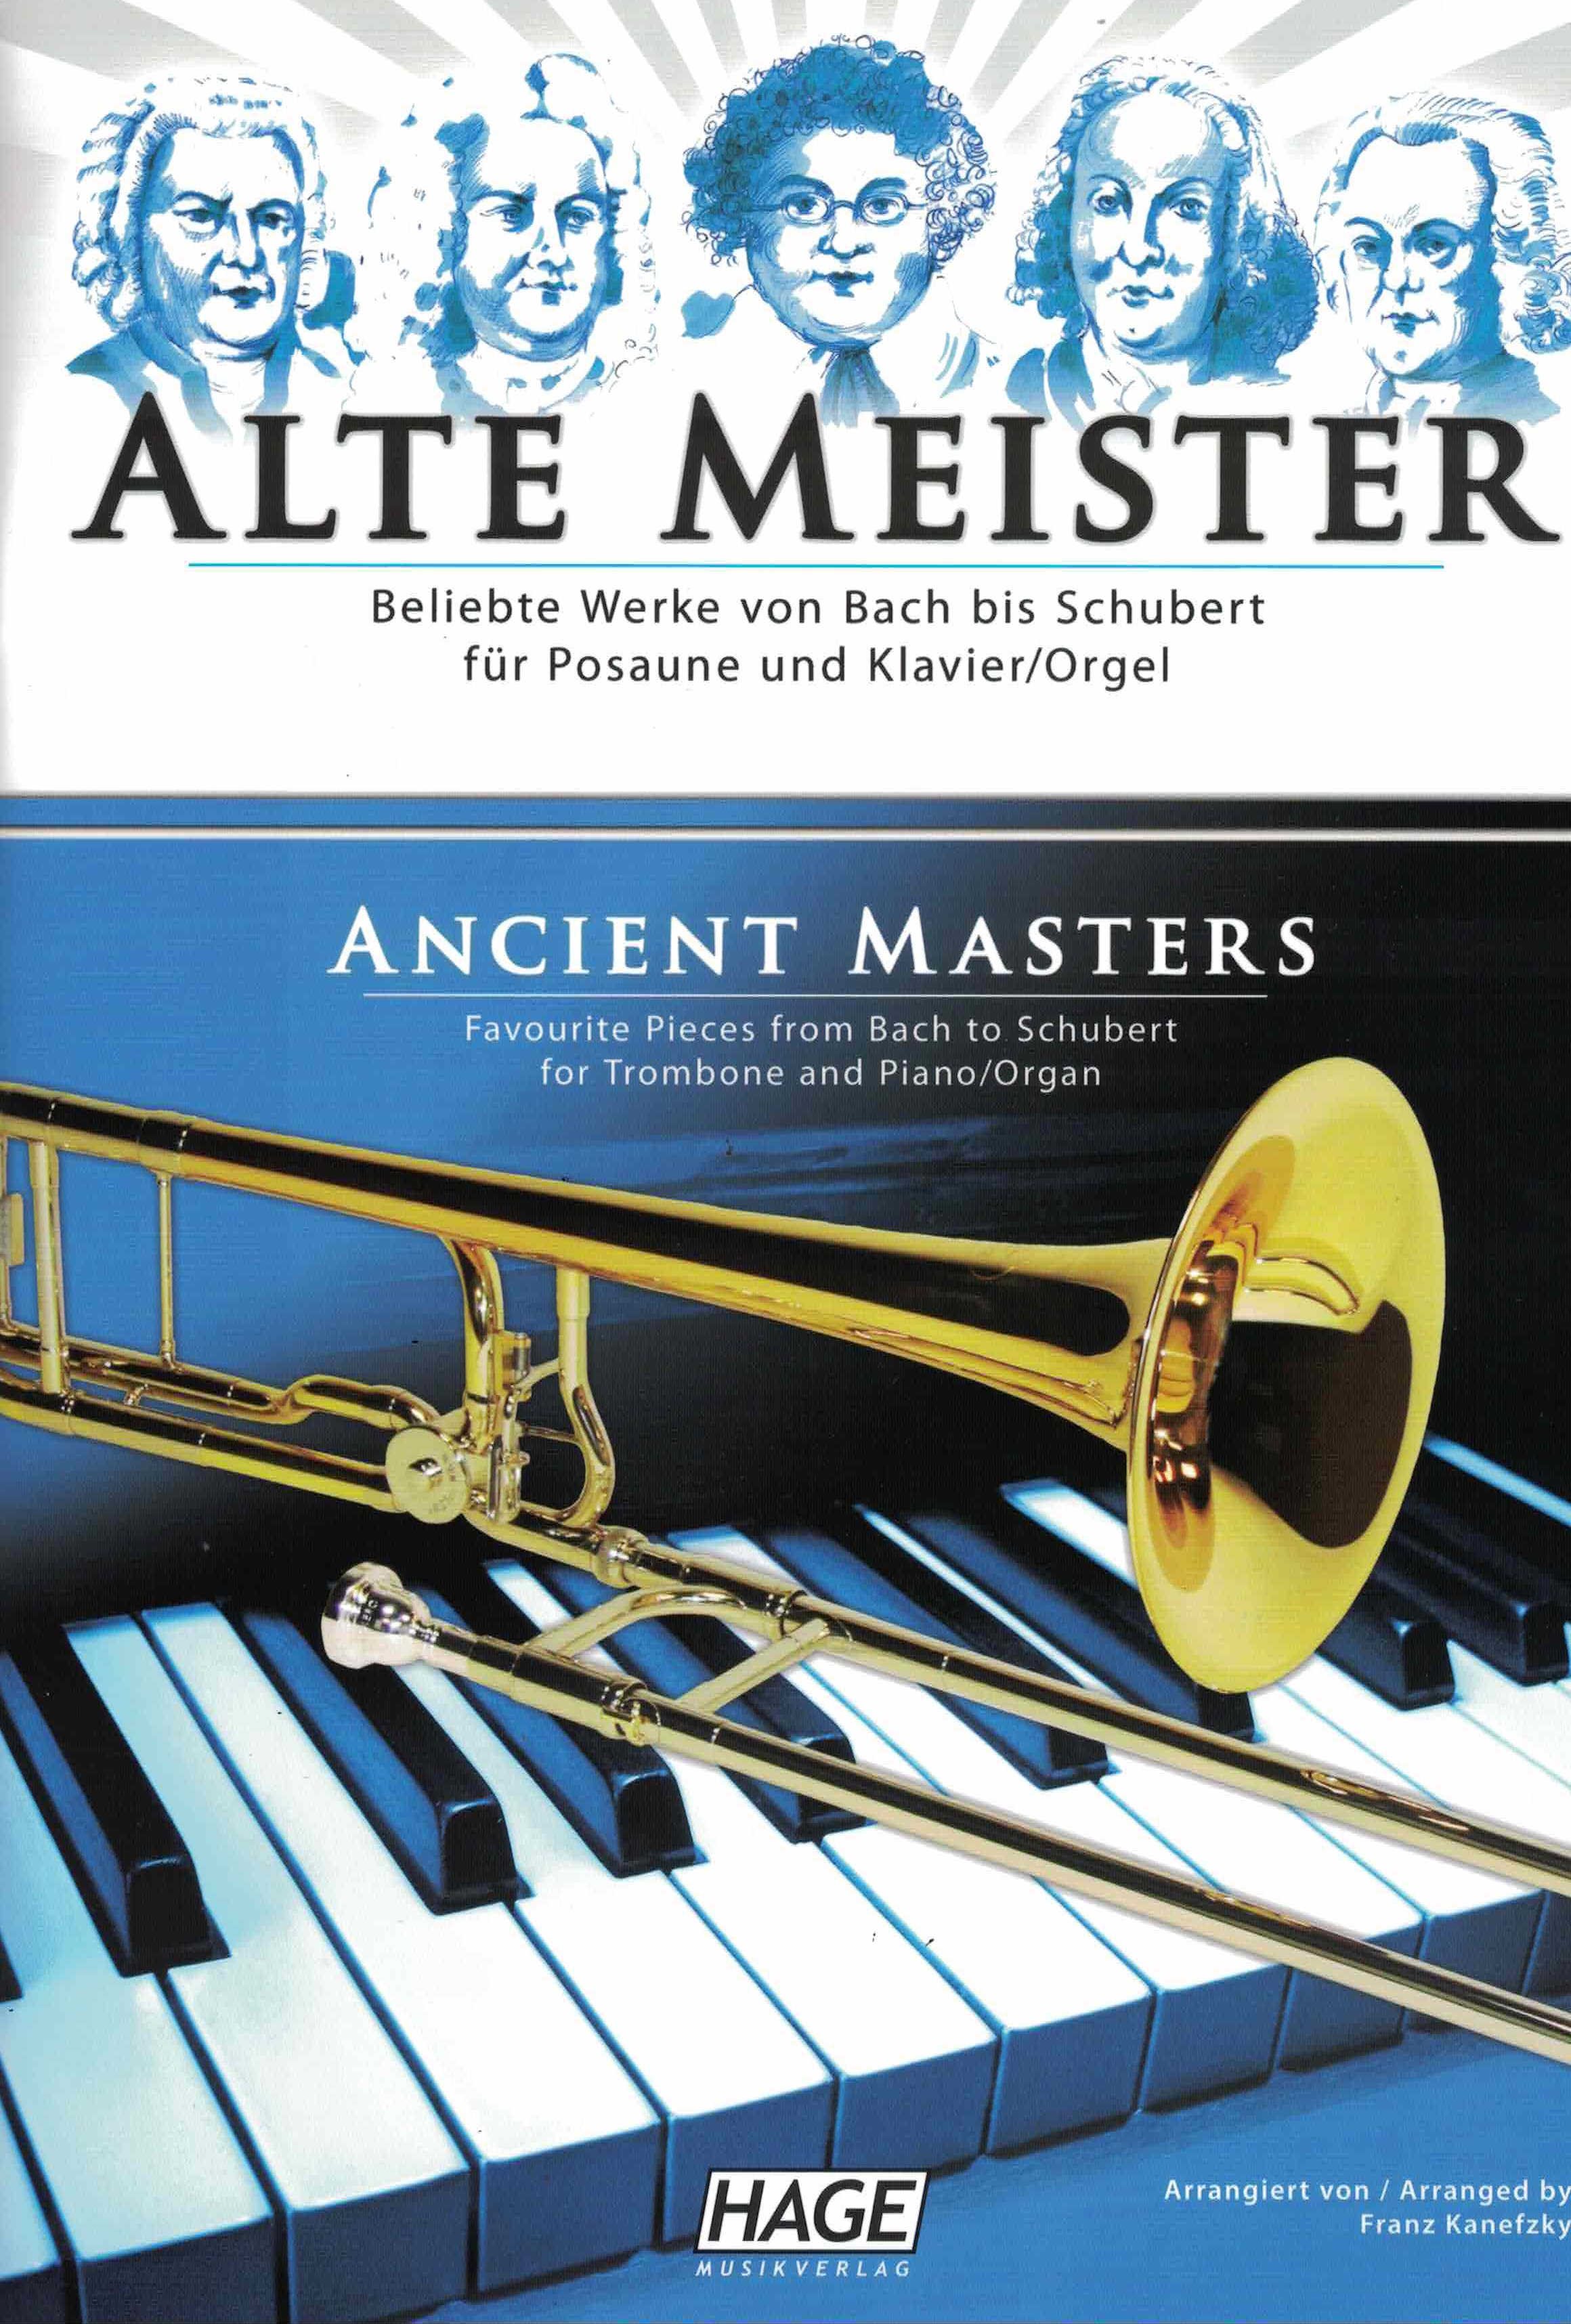 Alte Meister - Posaune, Klavier (Orgel)